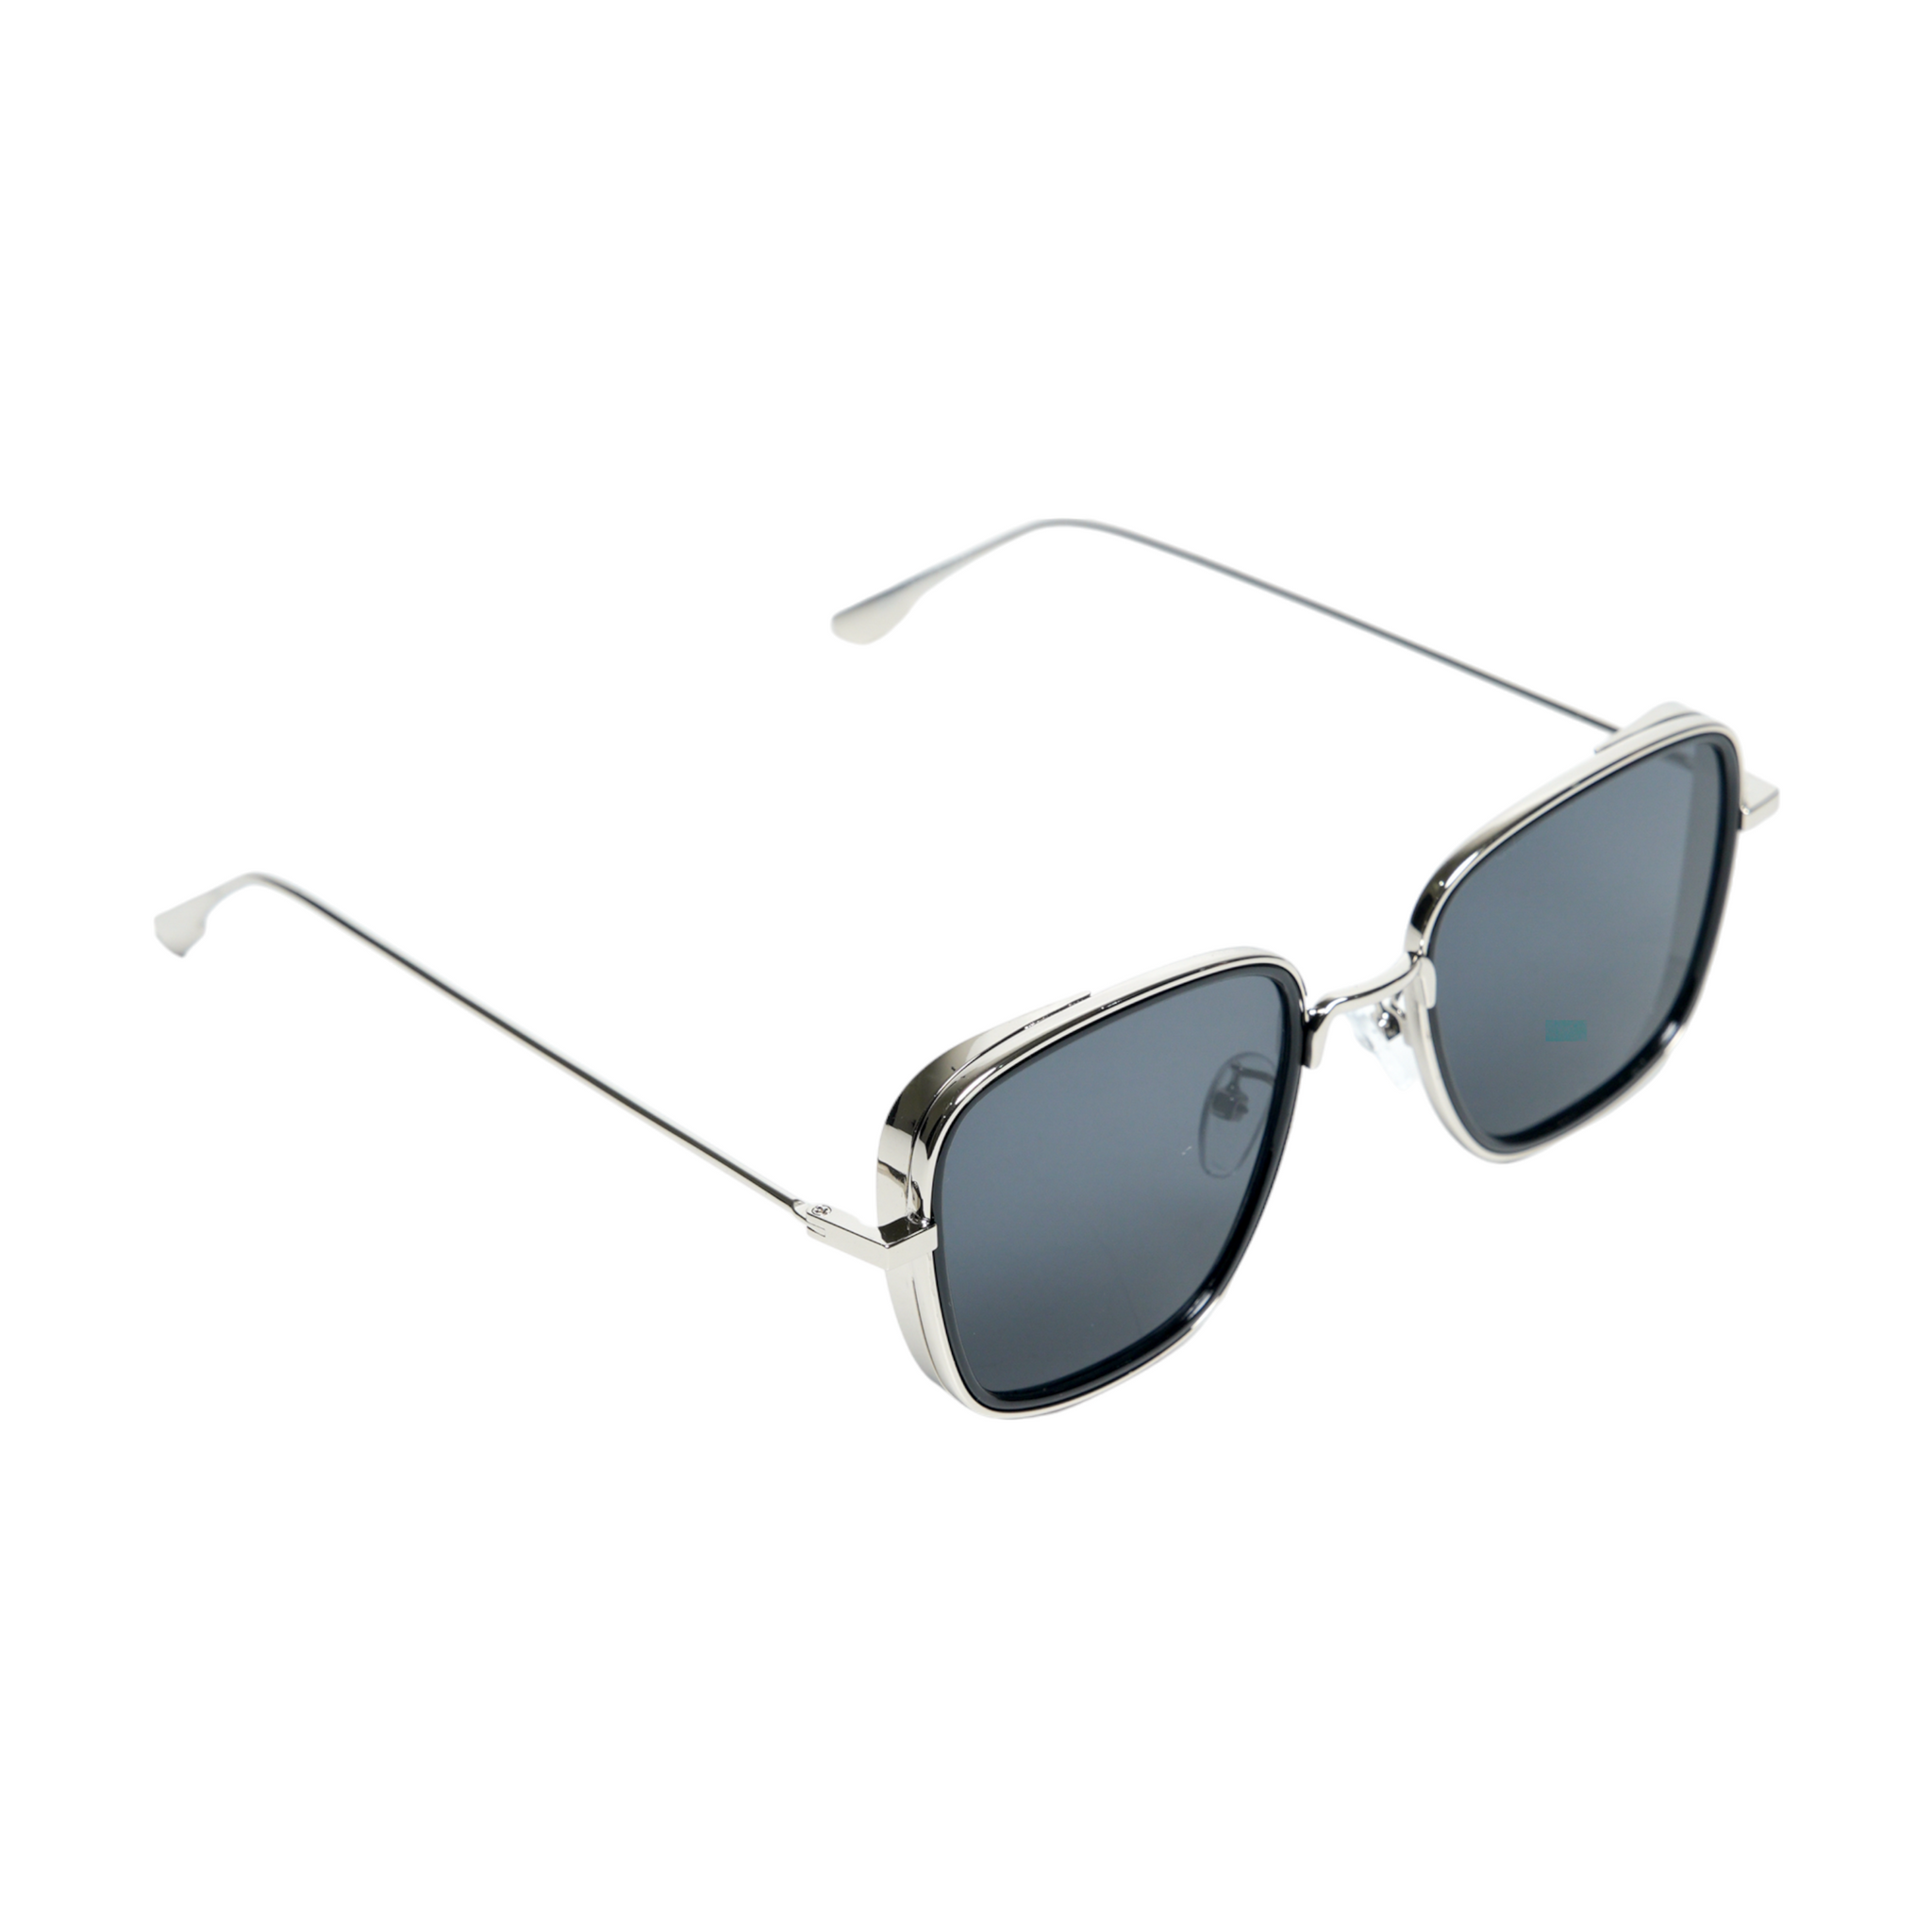 Chokore Iconic Wayfarer Sunglasses (Black & Silver)